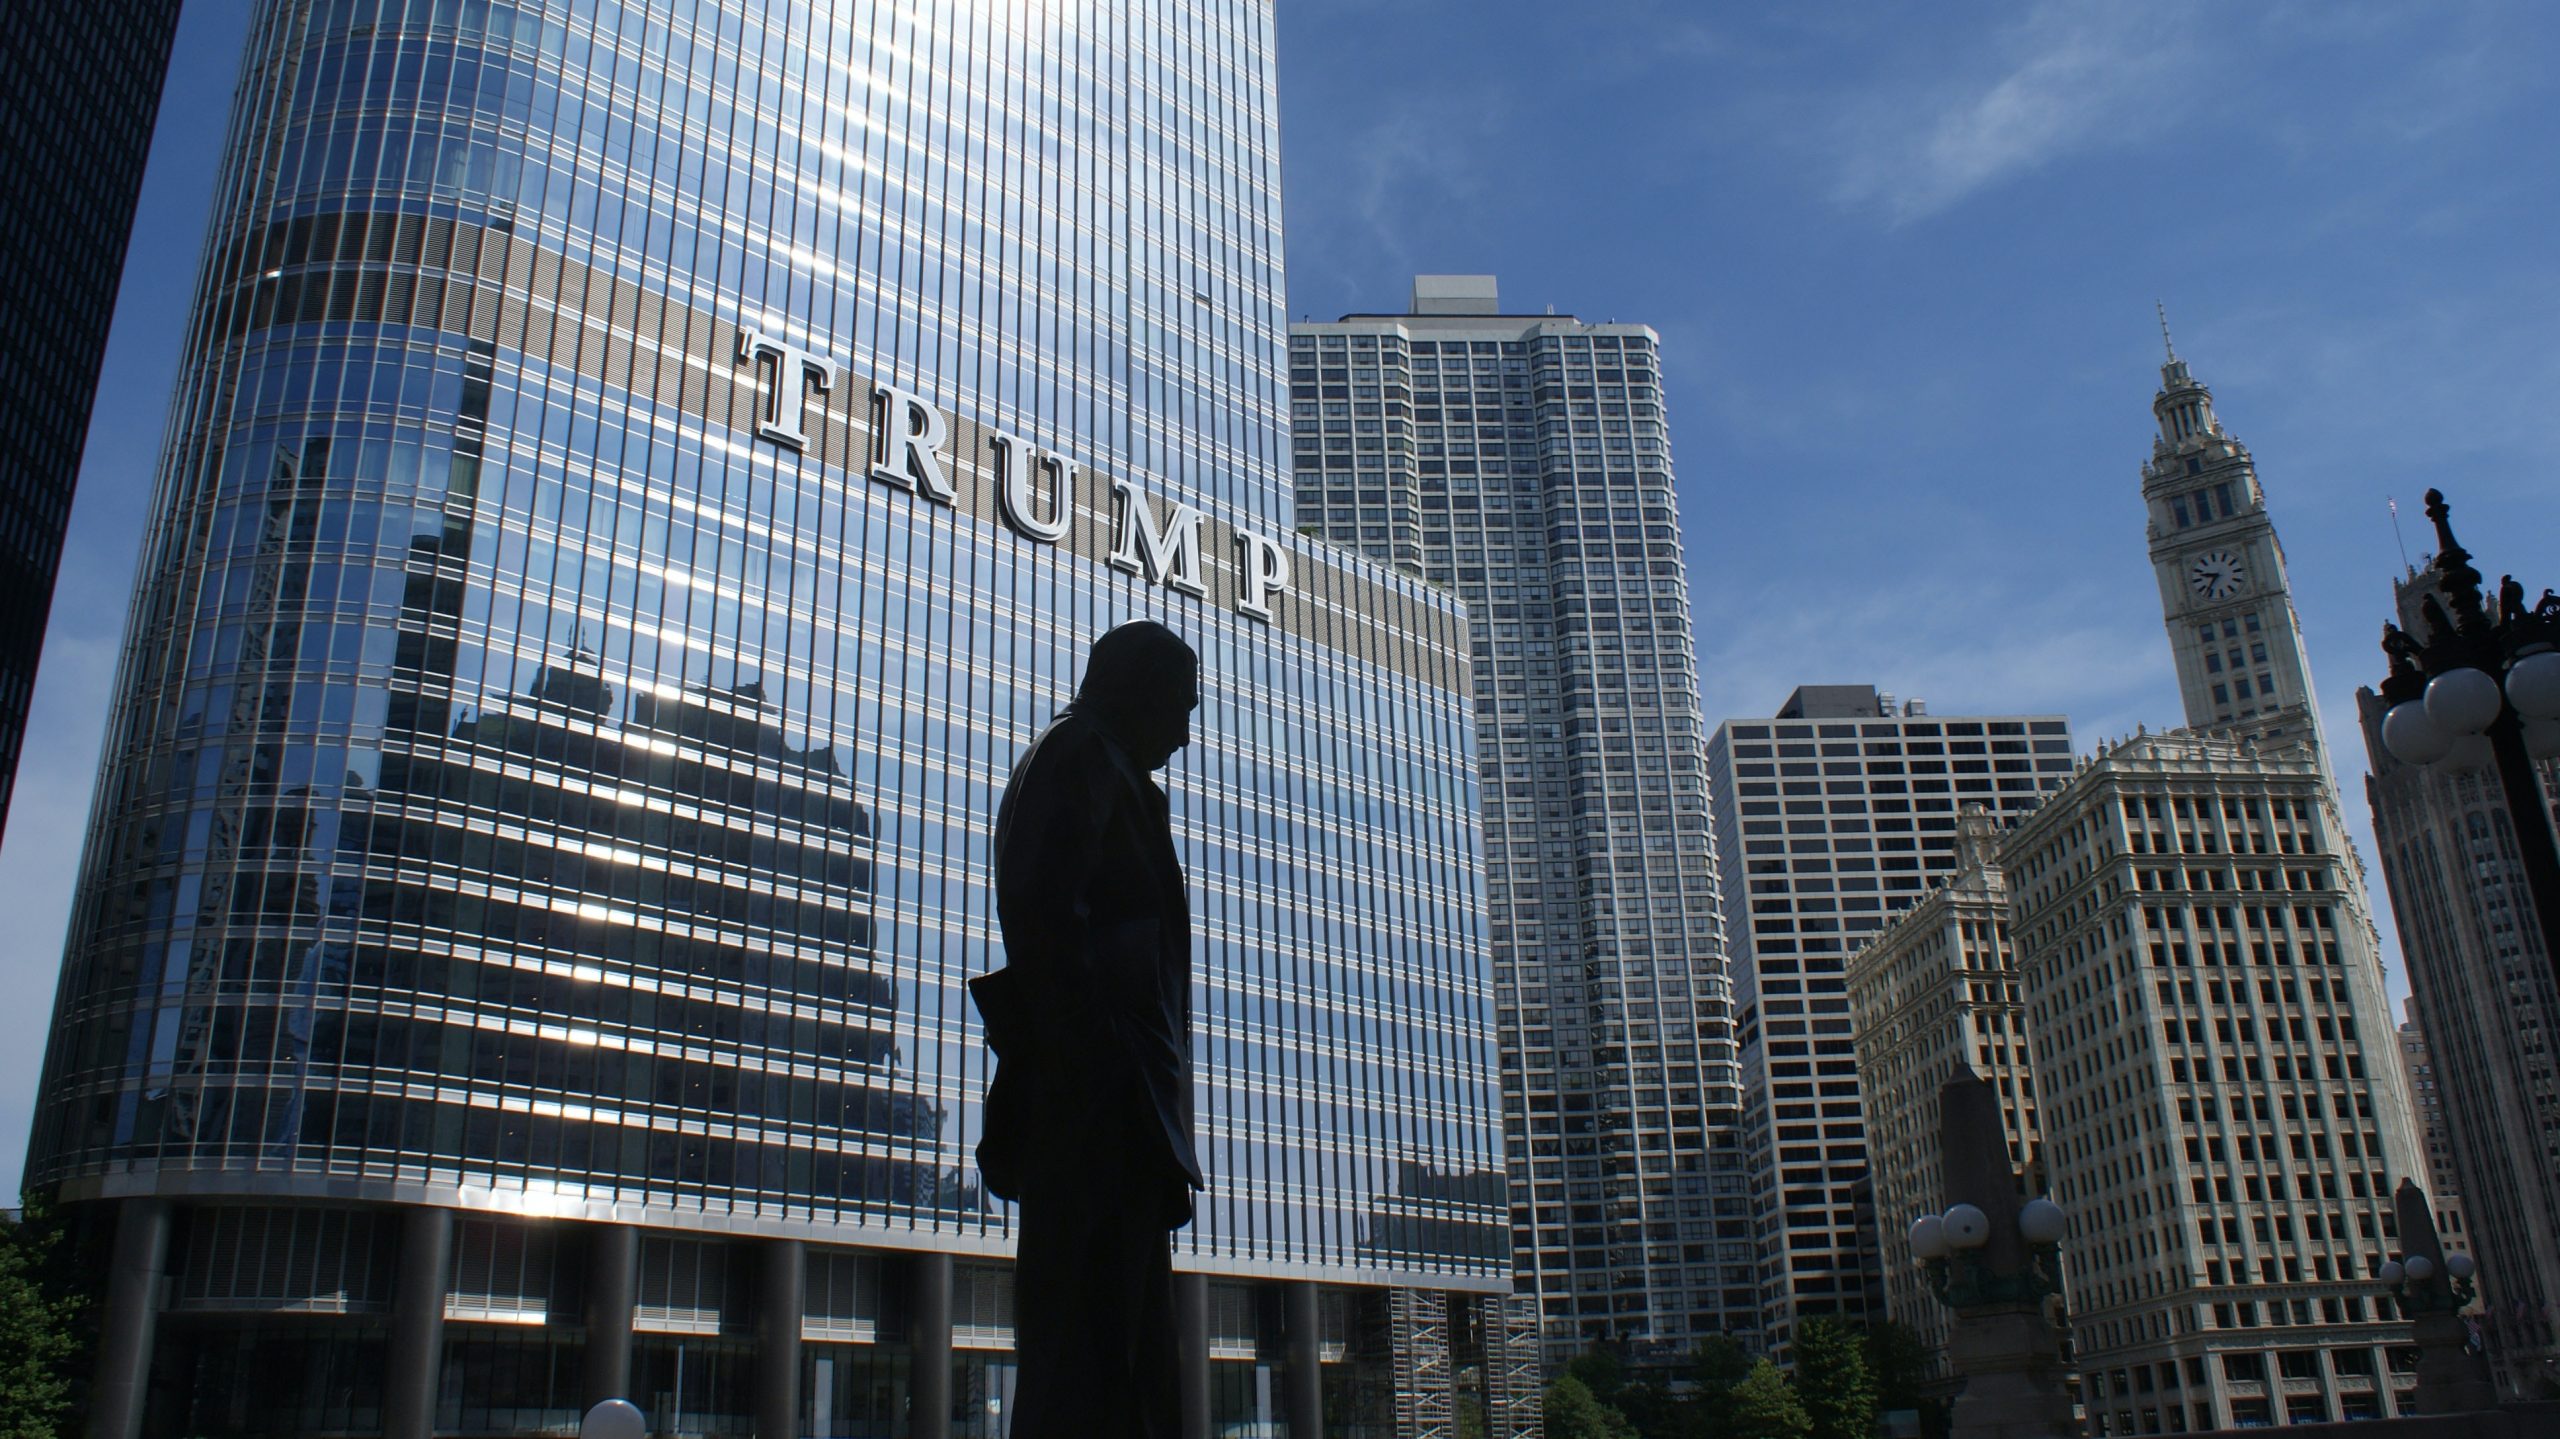 Statue next to Donald Trump's Trump Tower